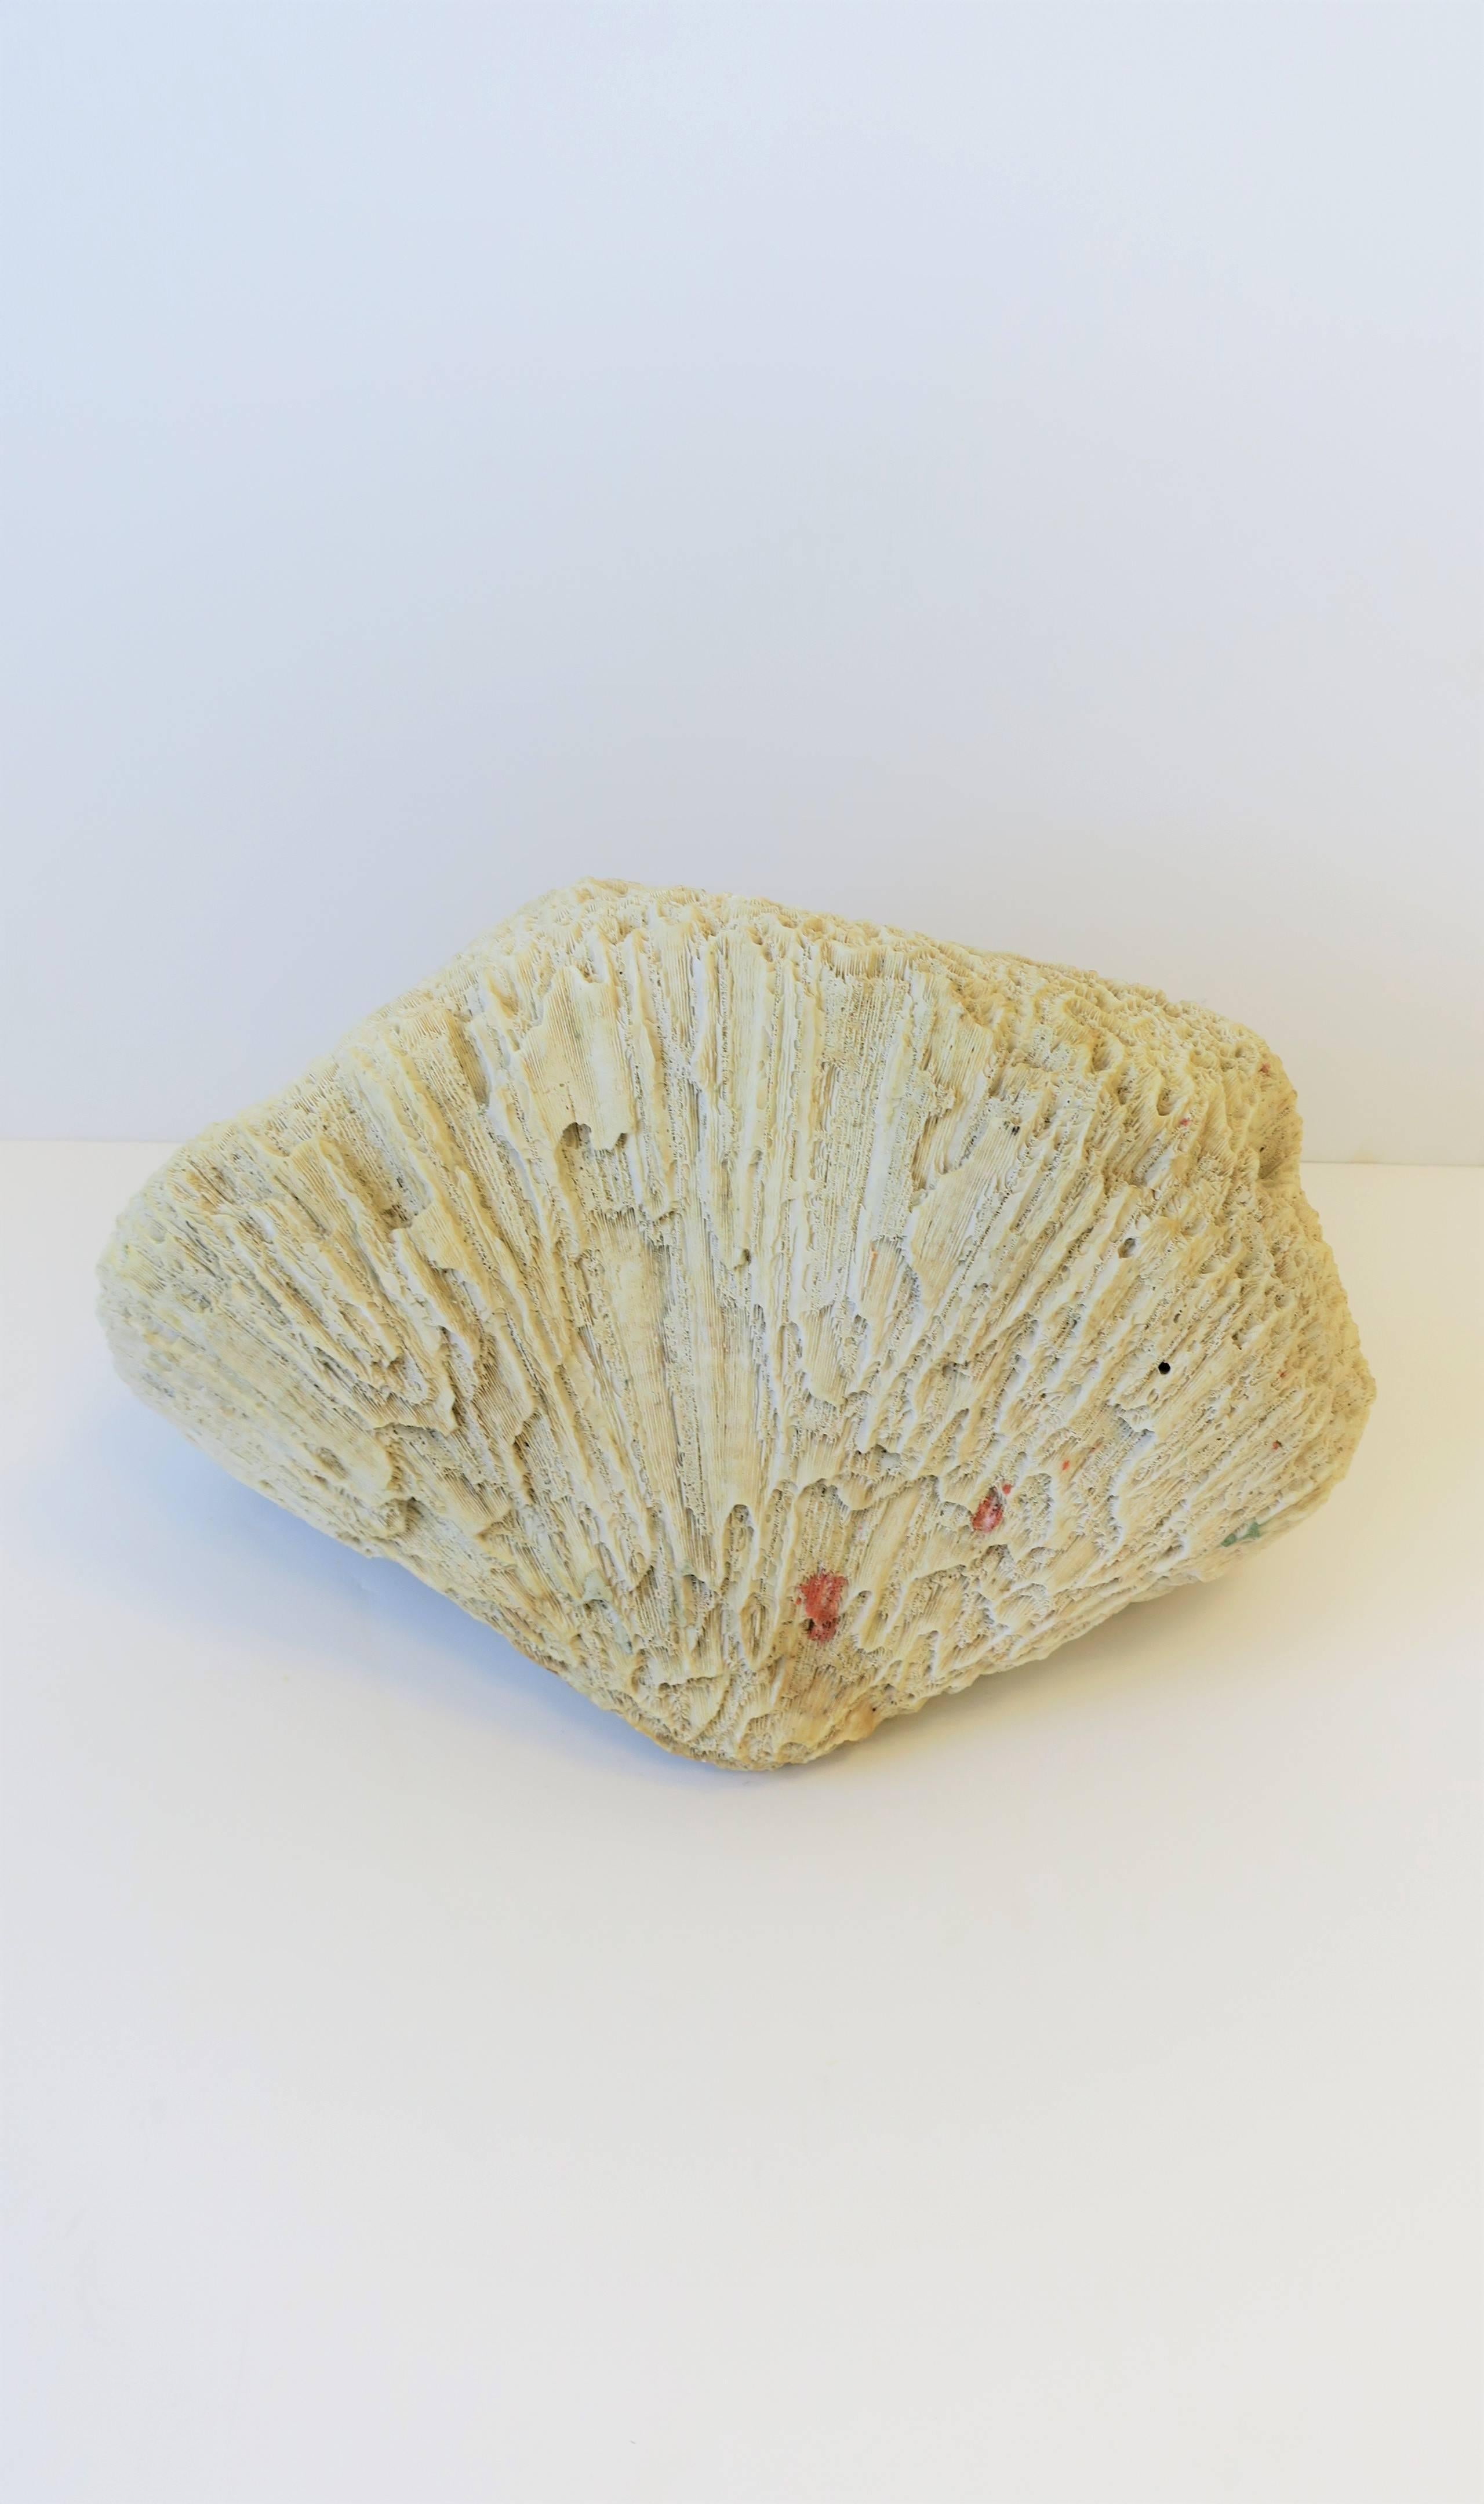 Brain Coral Natural Specimen For Sale 3